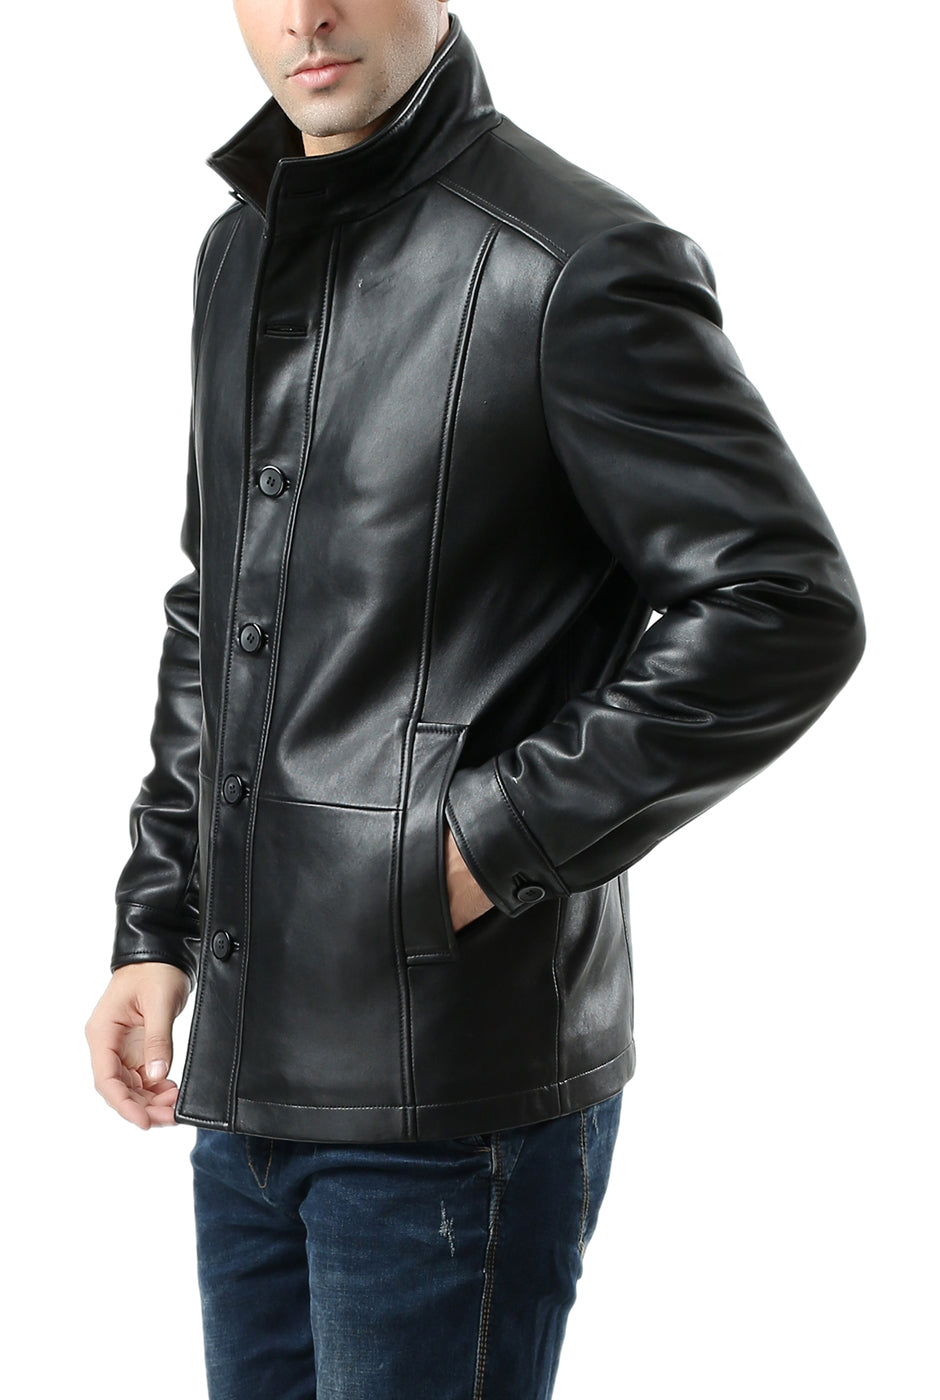 BGSD Men's "Brady" New Zealand Lambskin Leather City Jacket